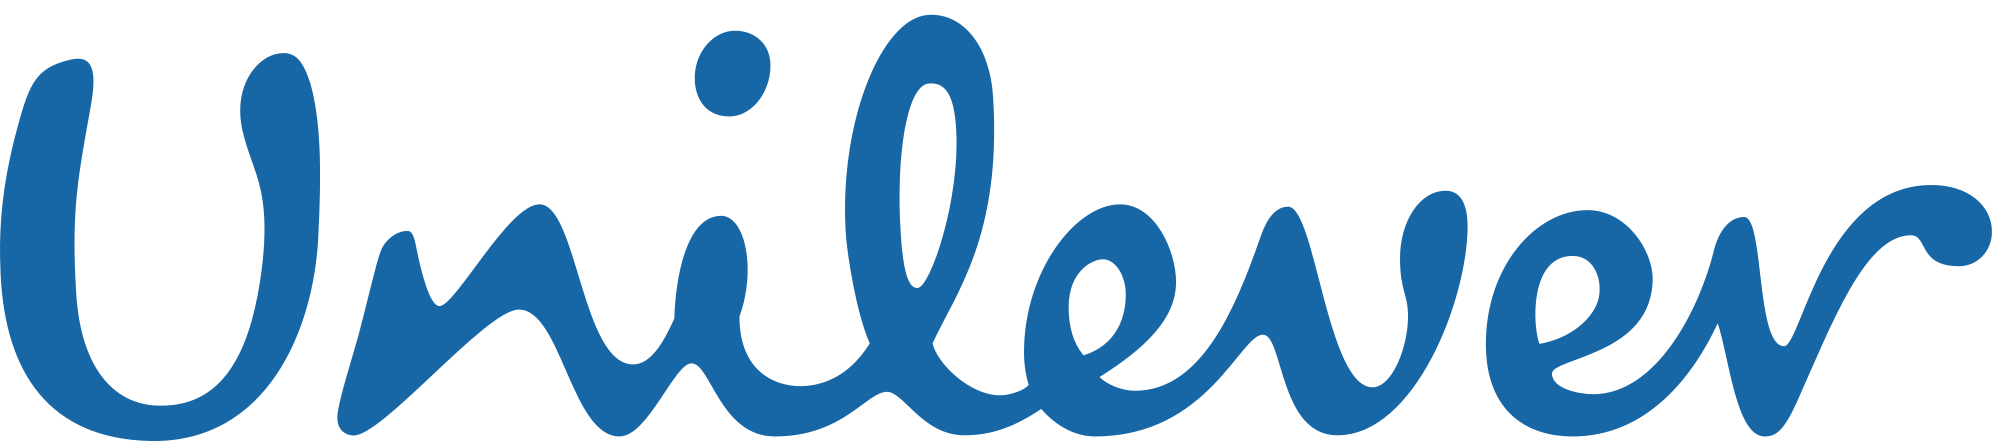 Unilever_logo